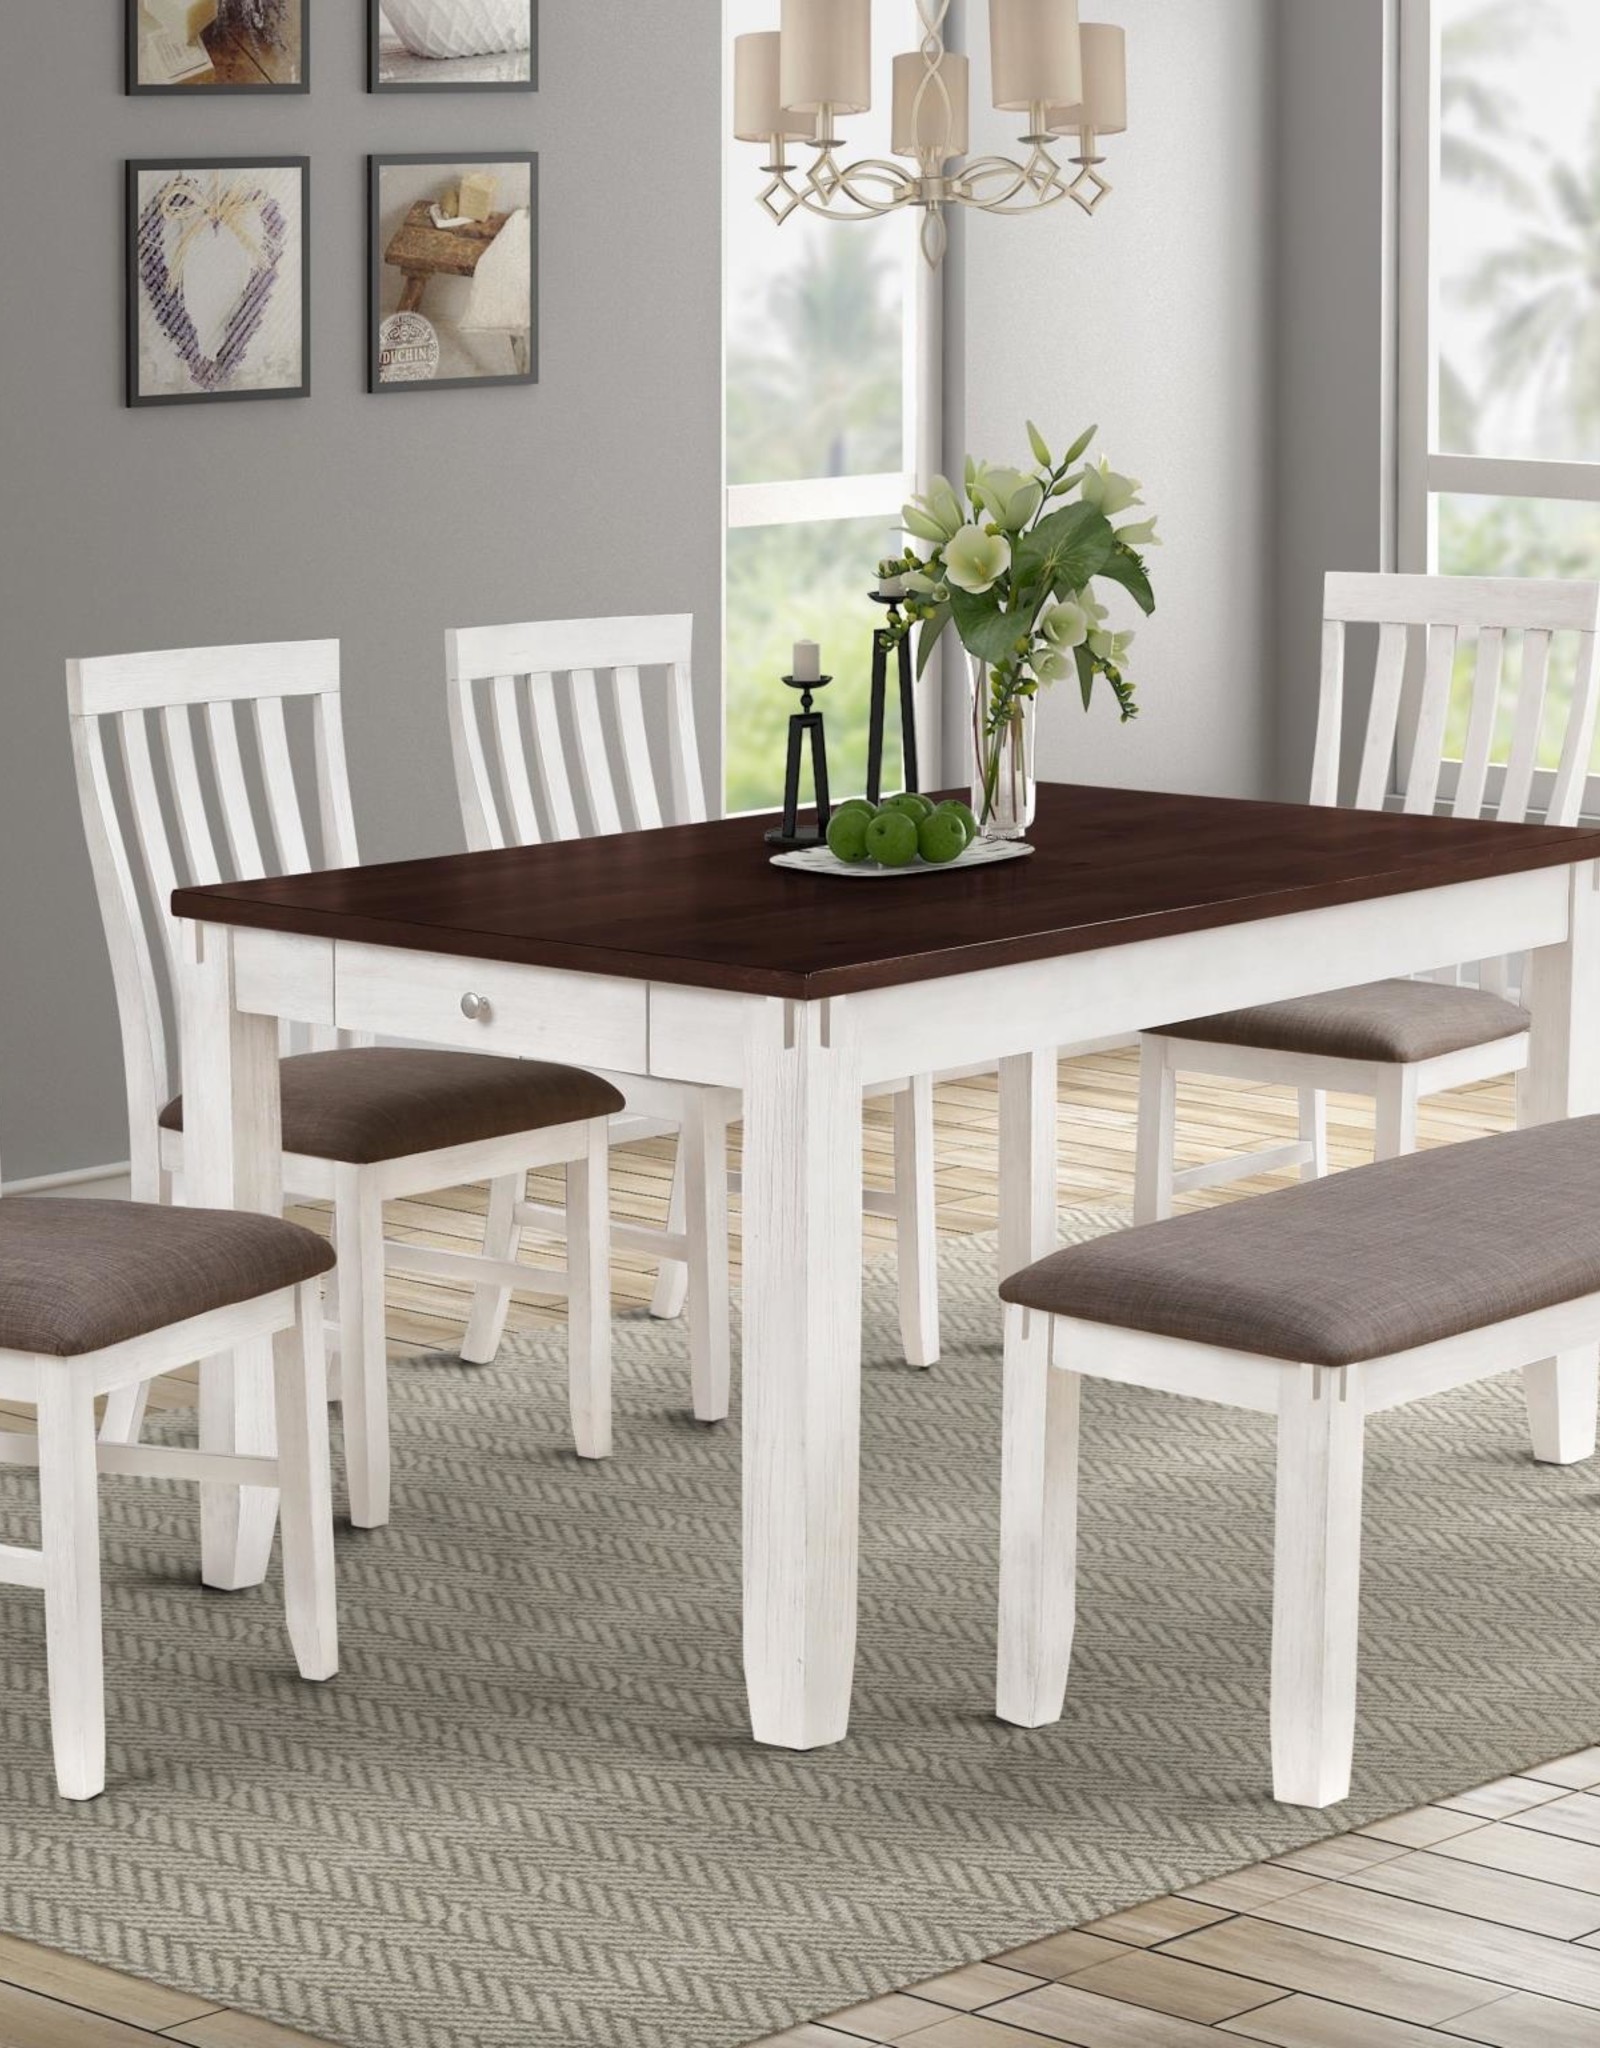 MYCO Elara Dining Table w/4 Chairs + Bench